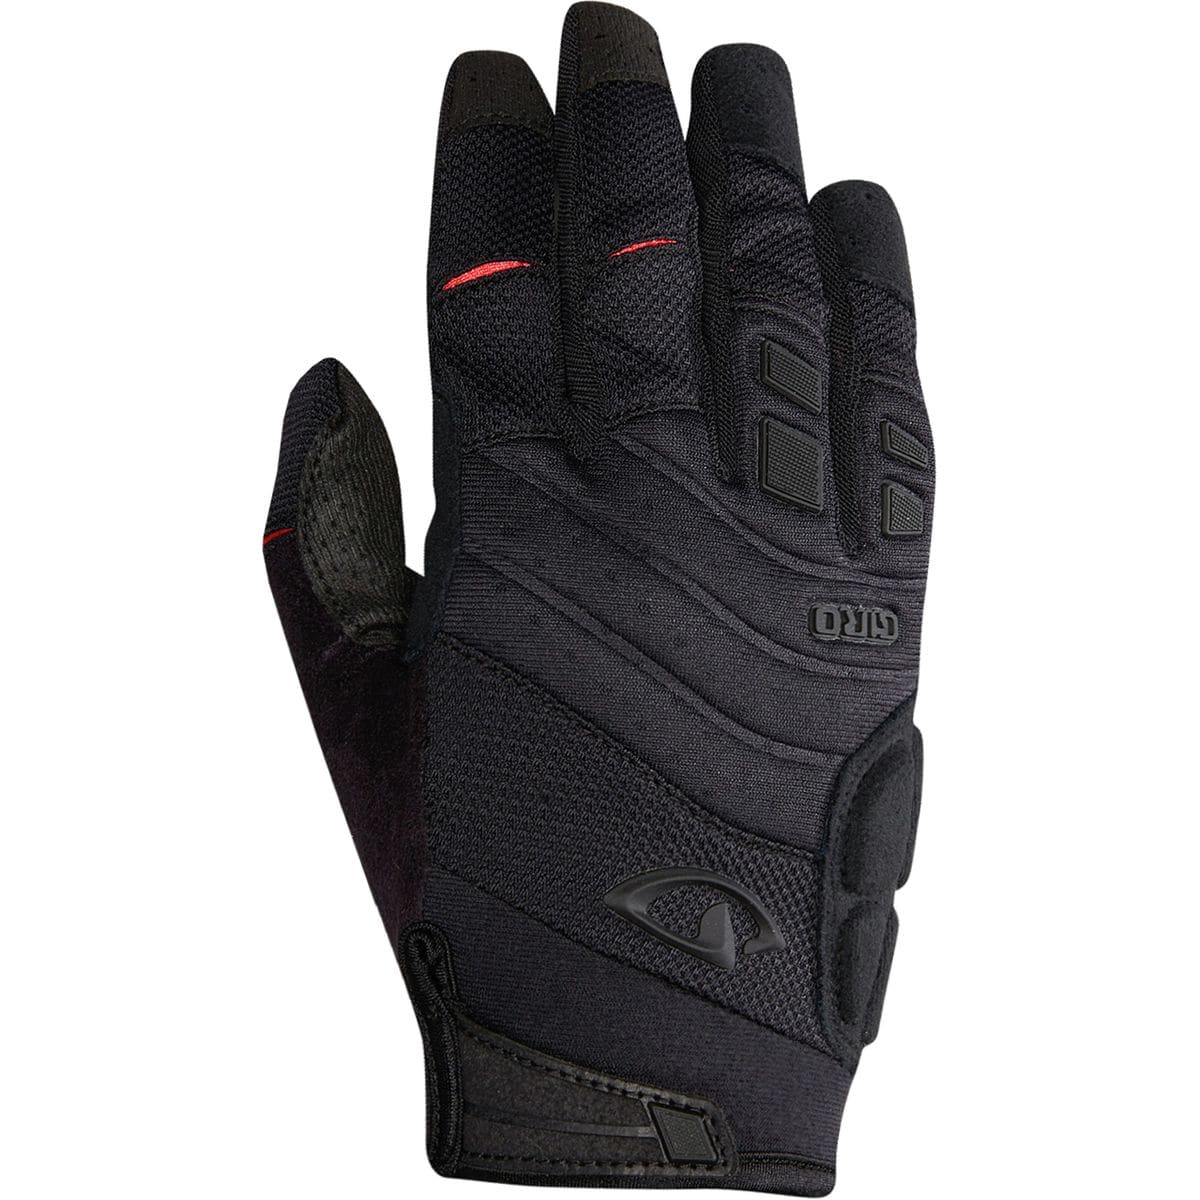 Giro Xena Gloves - Women's